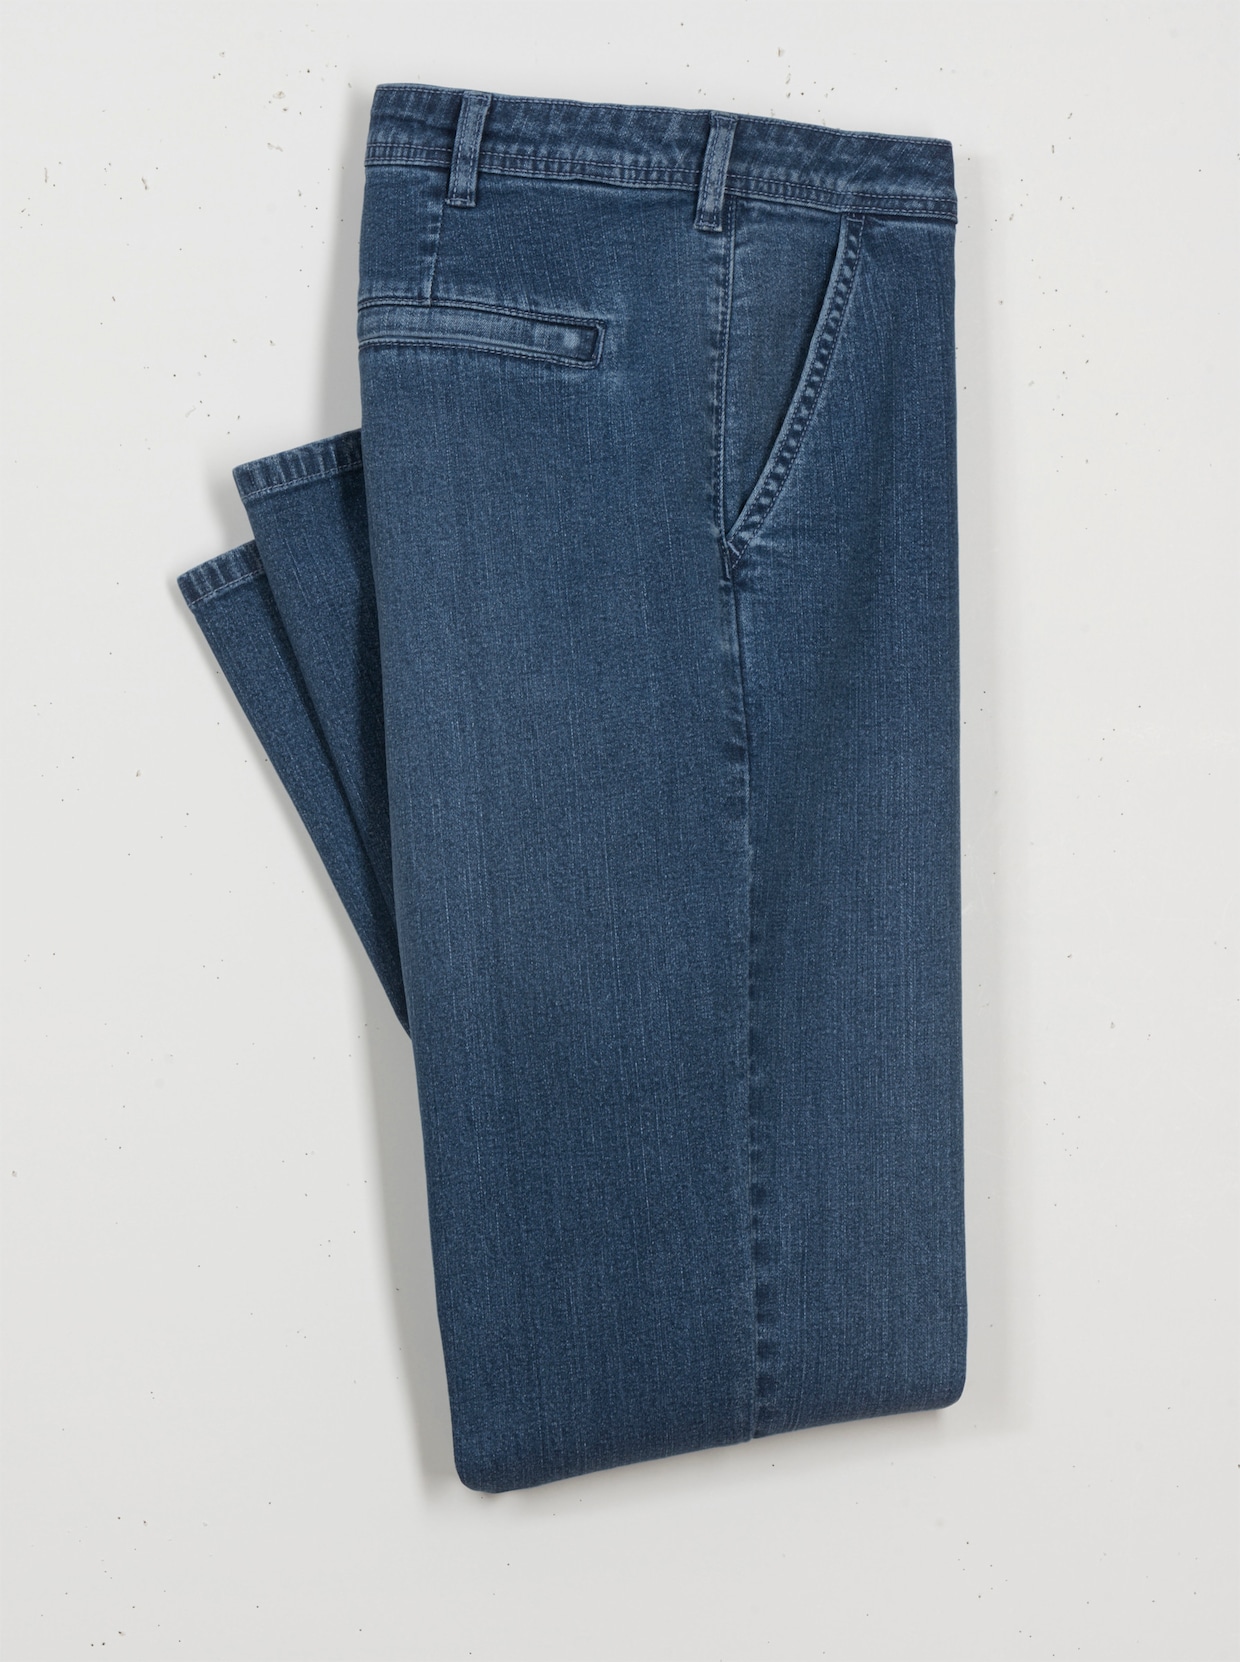 jeans - blue-bleached